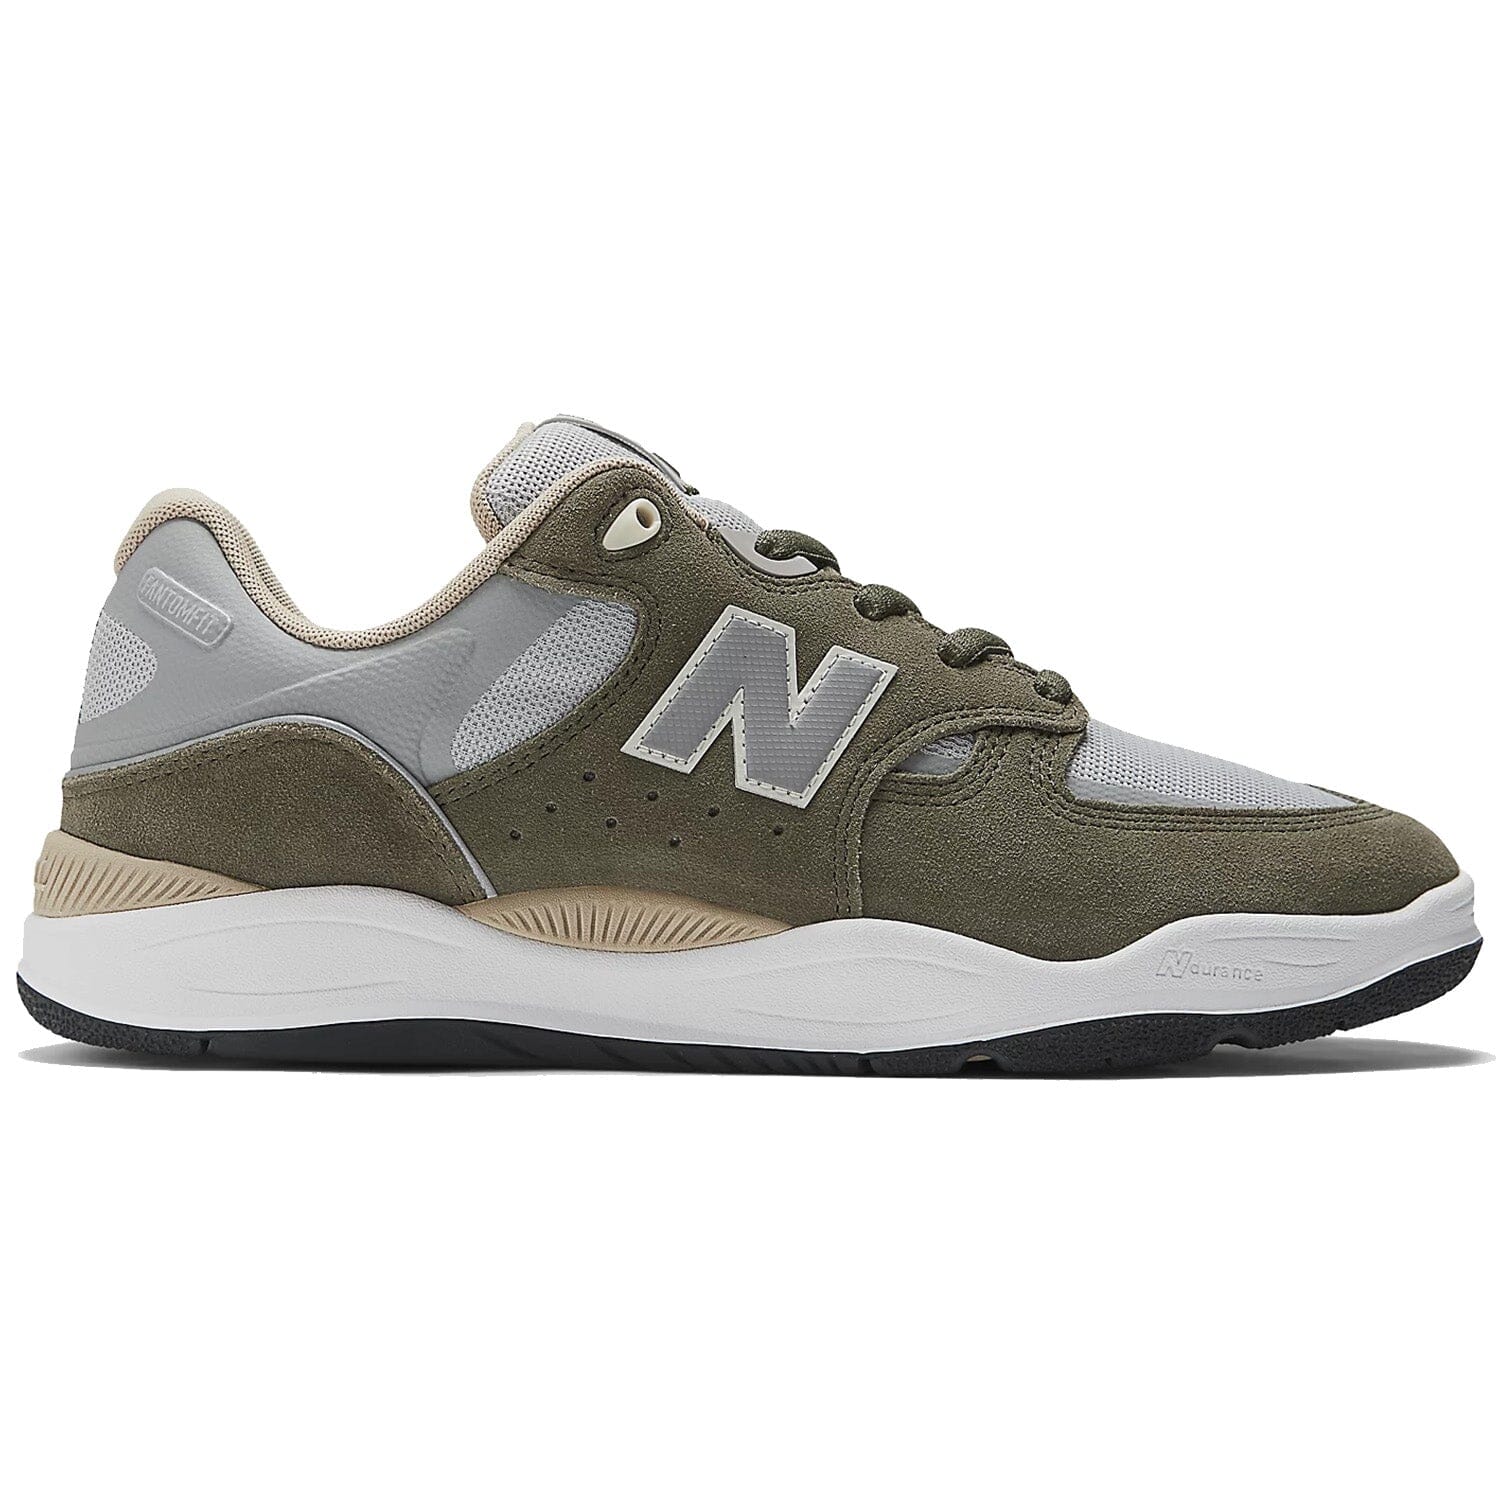 New Balance Numeric Tiago NM1010 Olive/Grey footwear New Balance Numeric 